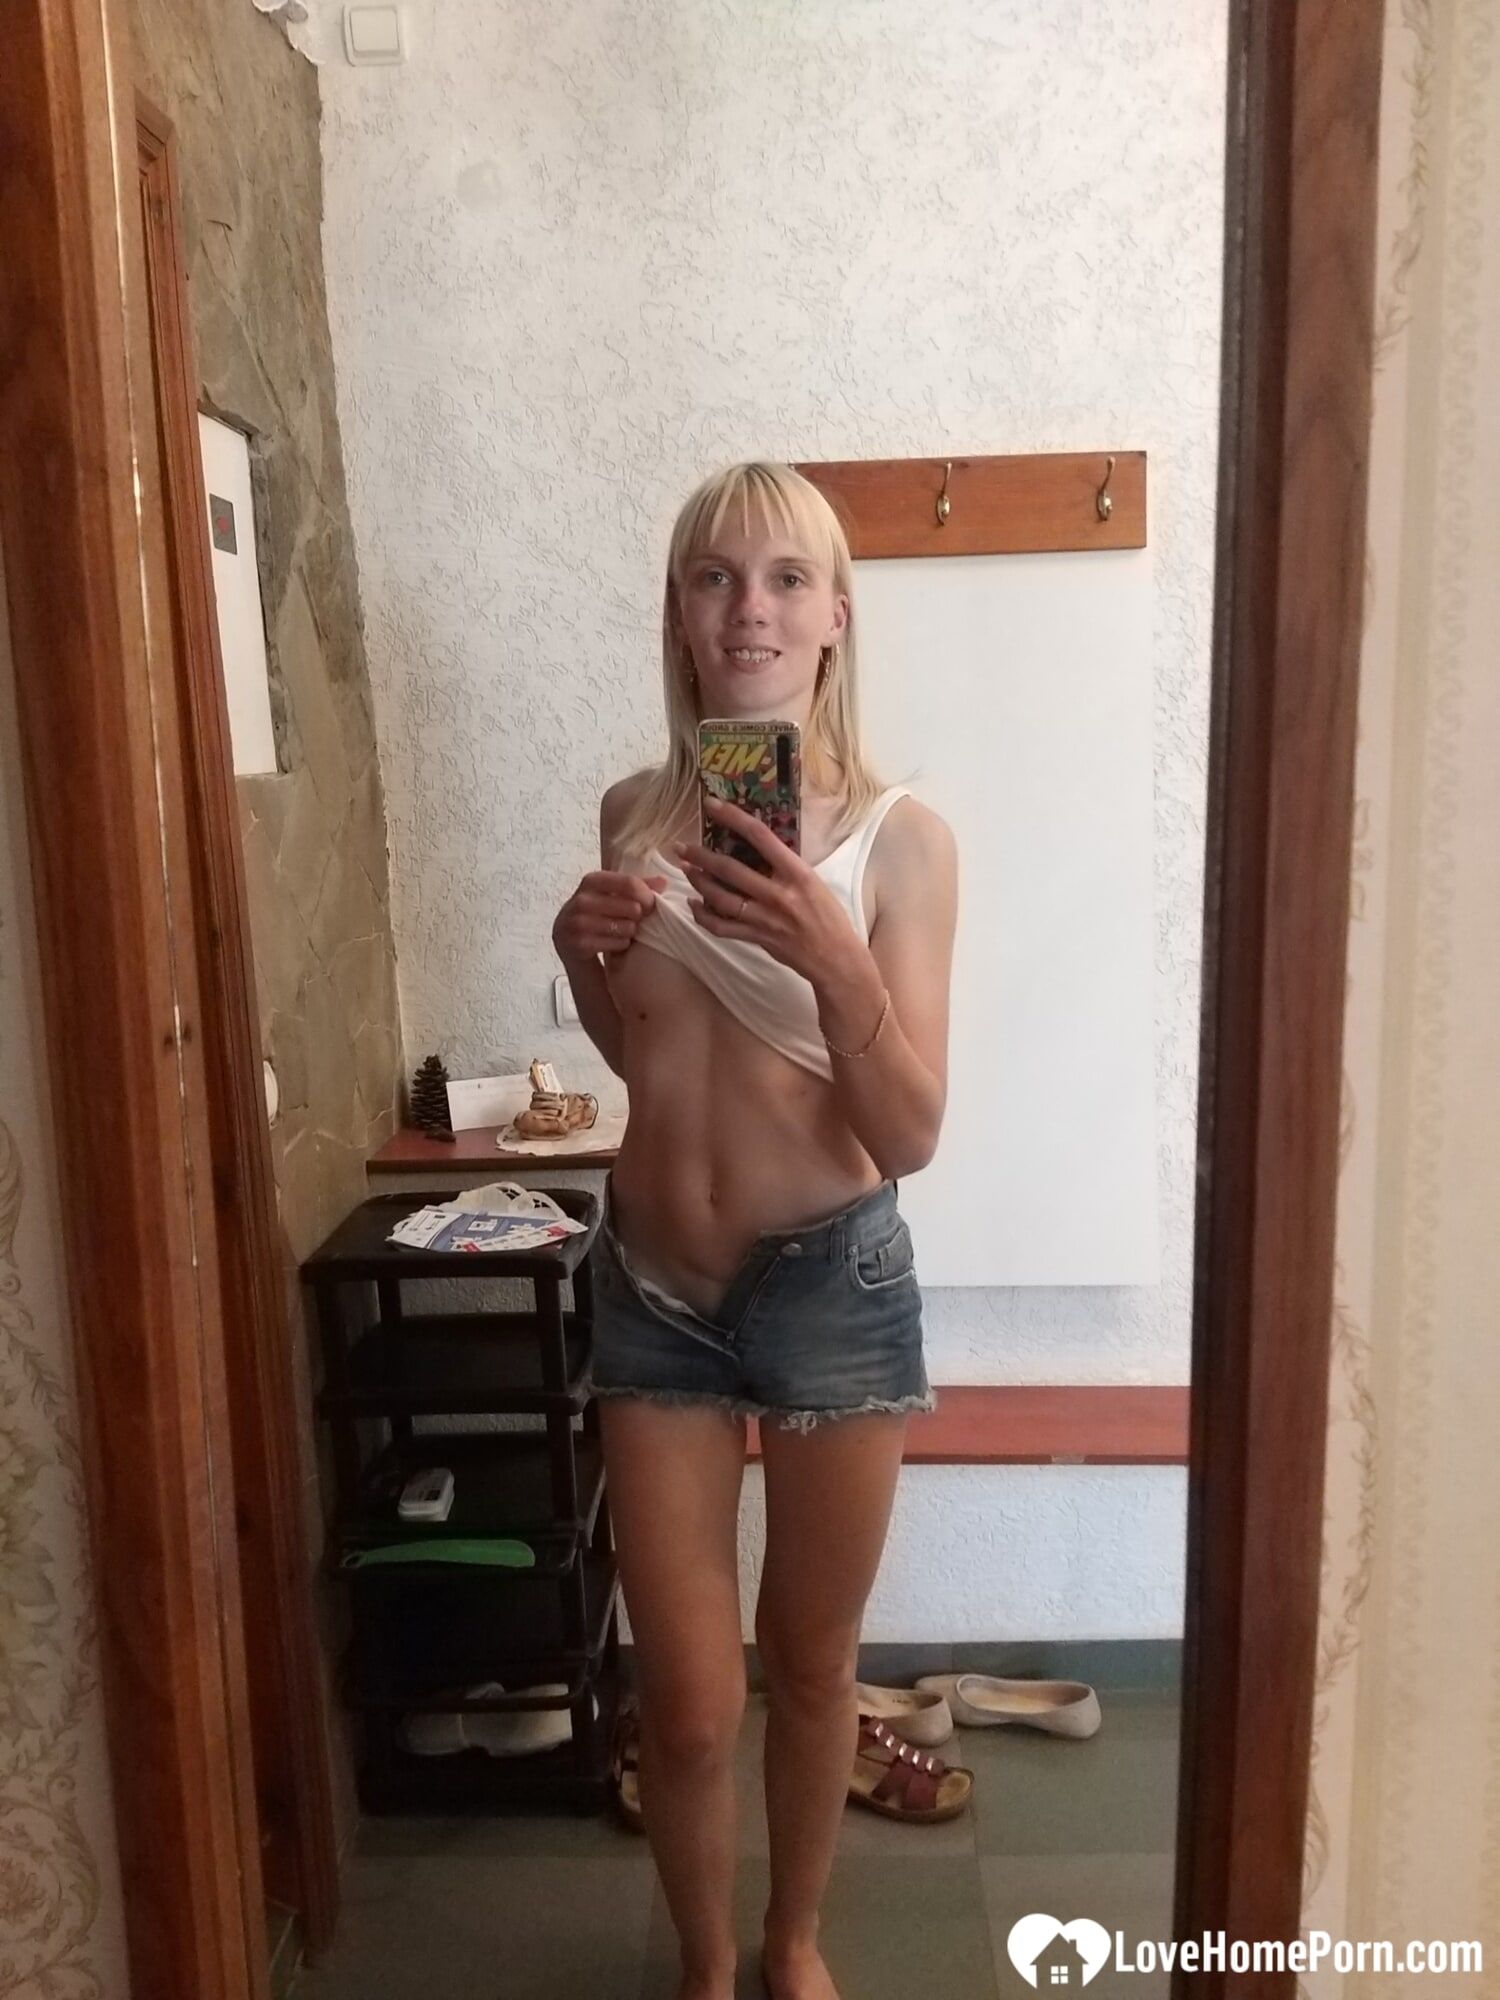 Innocent selfies turn into hot nude photos